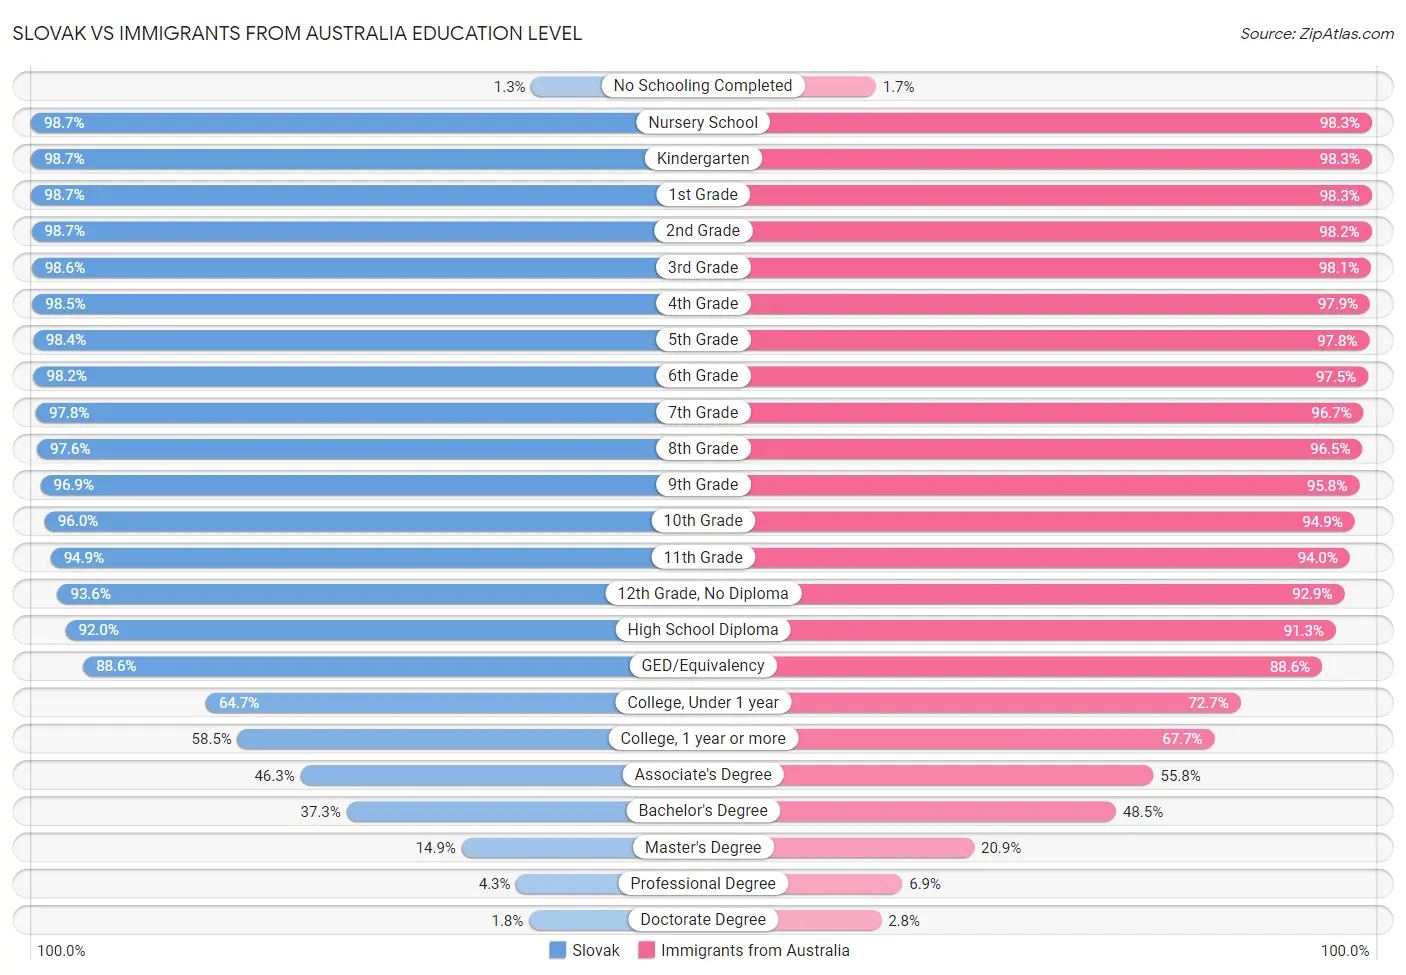 Slovak vs Immigrants from Australia Education Level